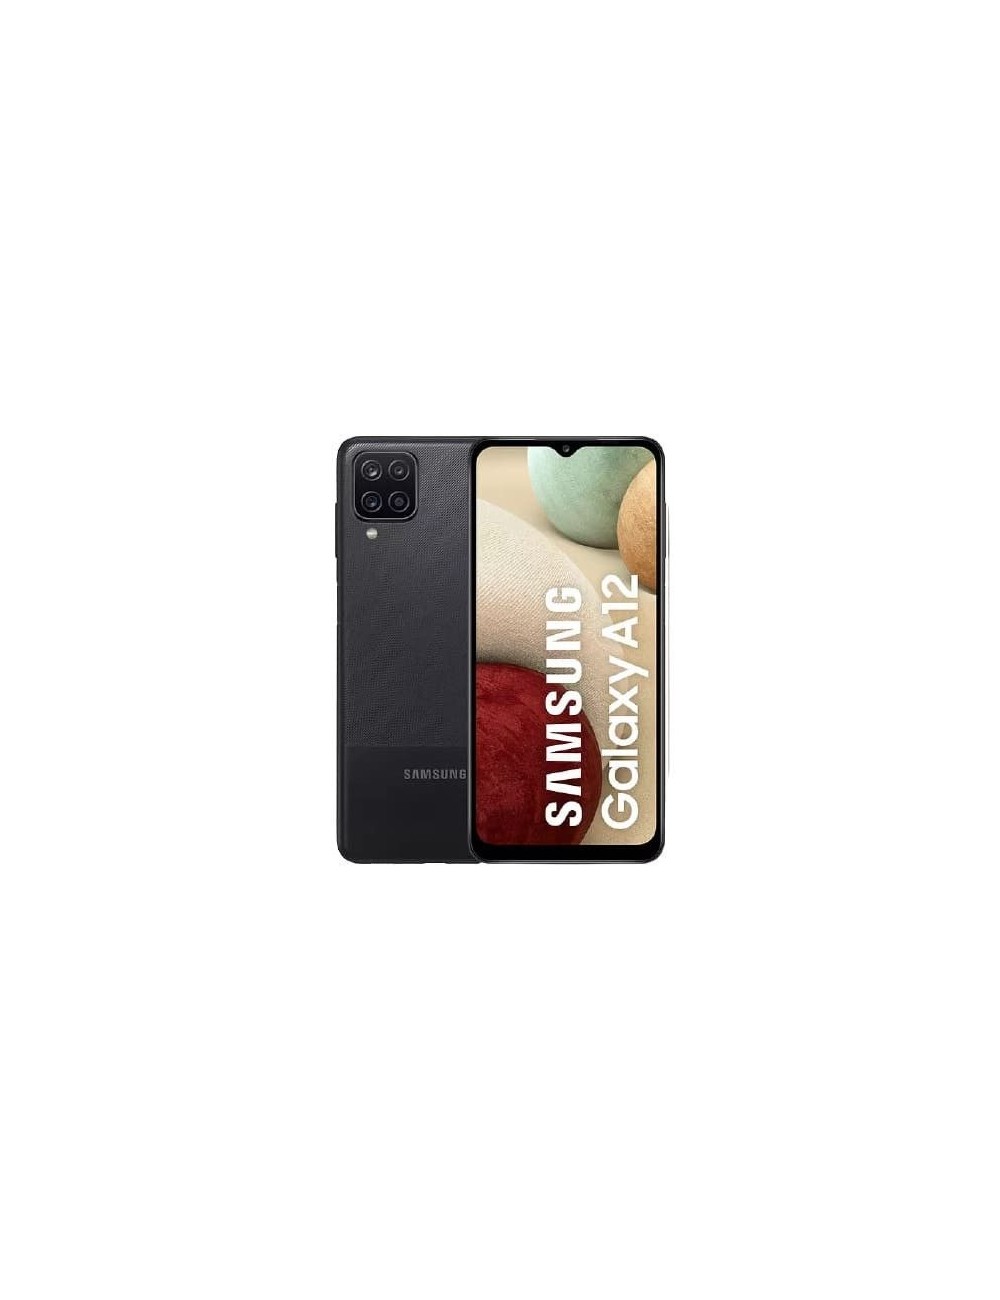 Teléfono Móvil Samsung Galaxy A12 6,5' Octa Core 4 + 64GB Negro